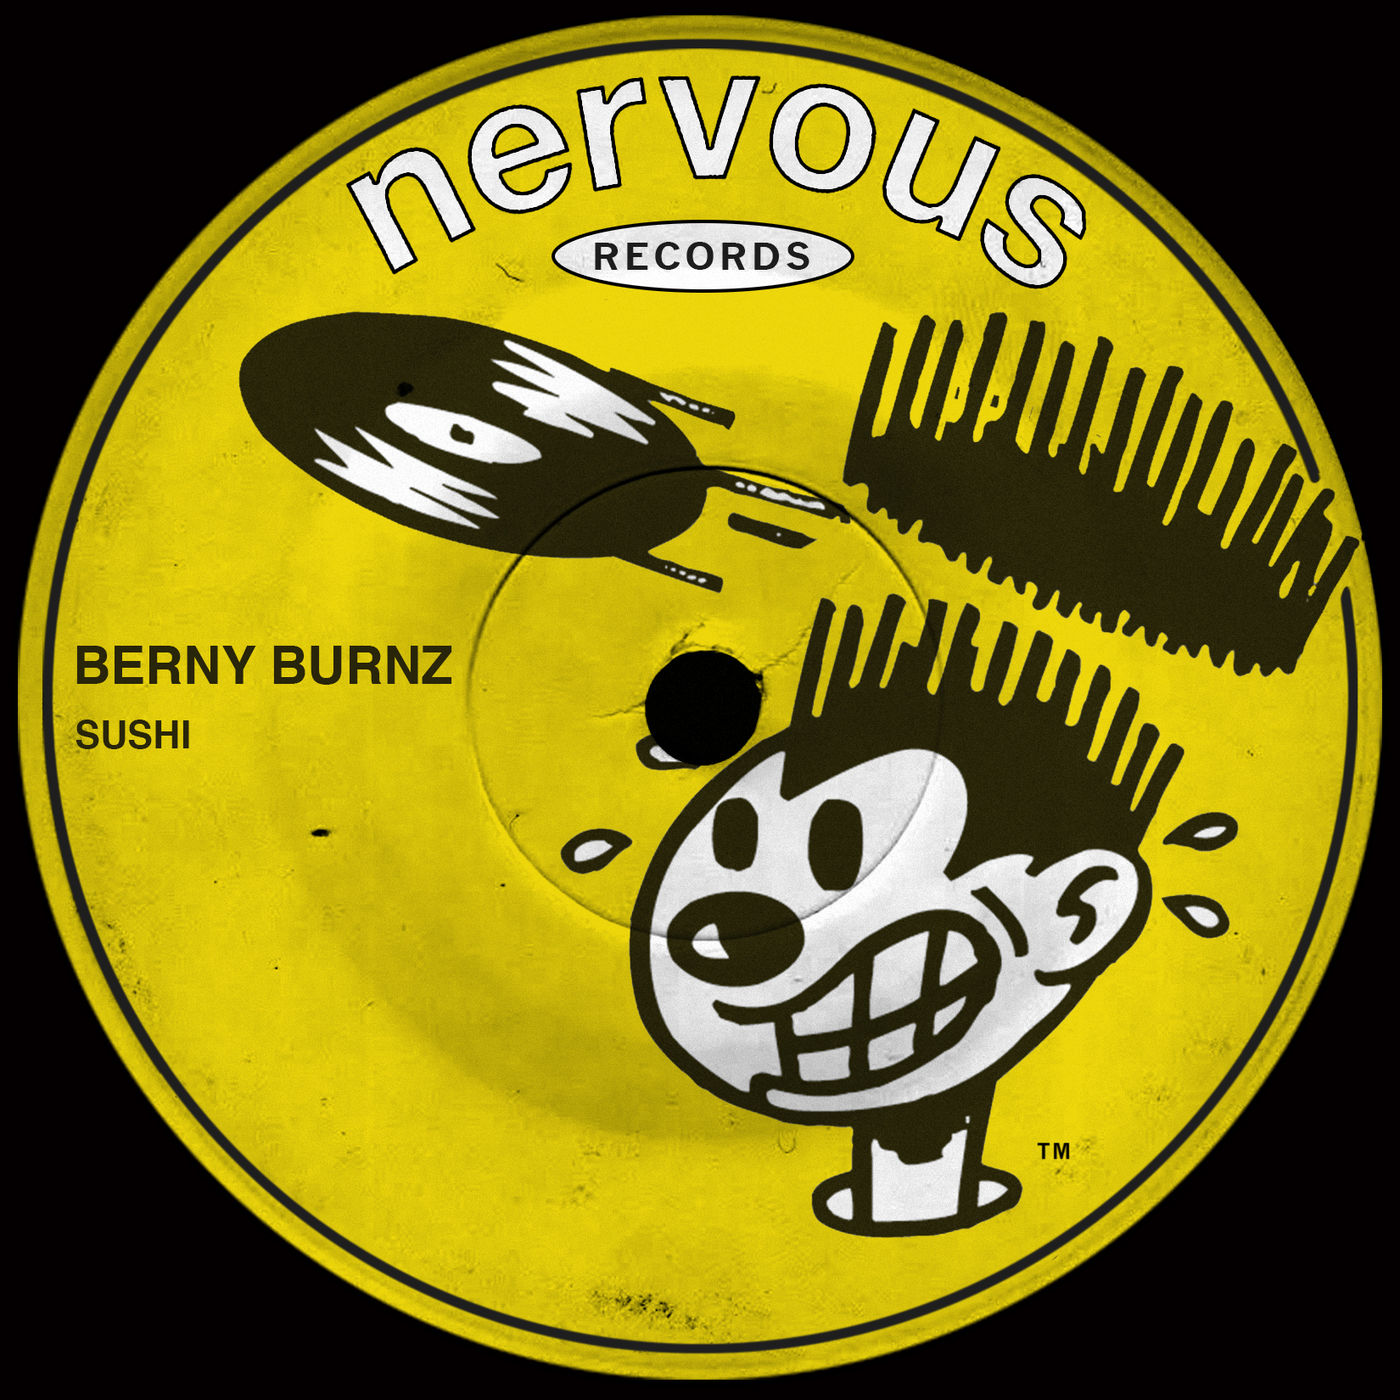 Berny Burnz - Sushi / Nervous Records